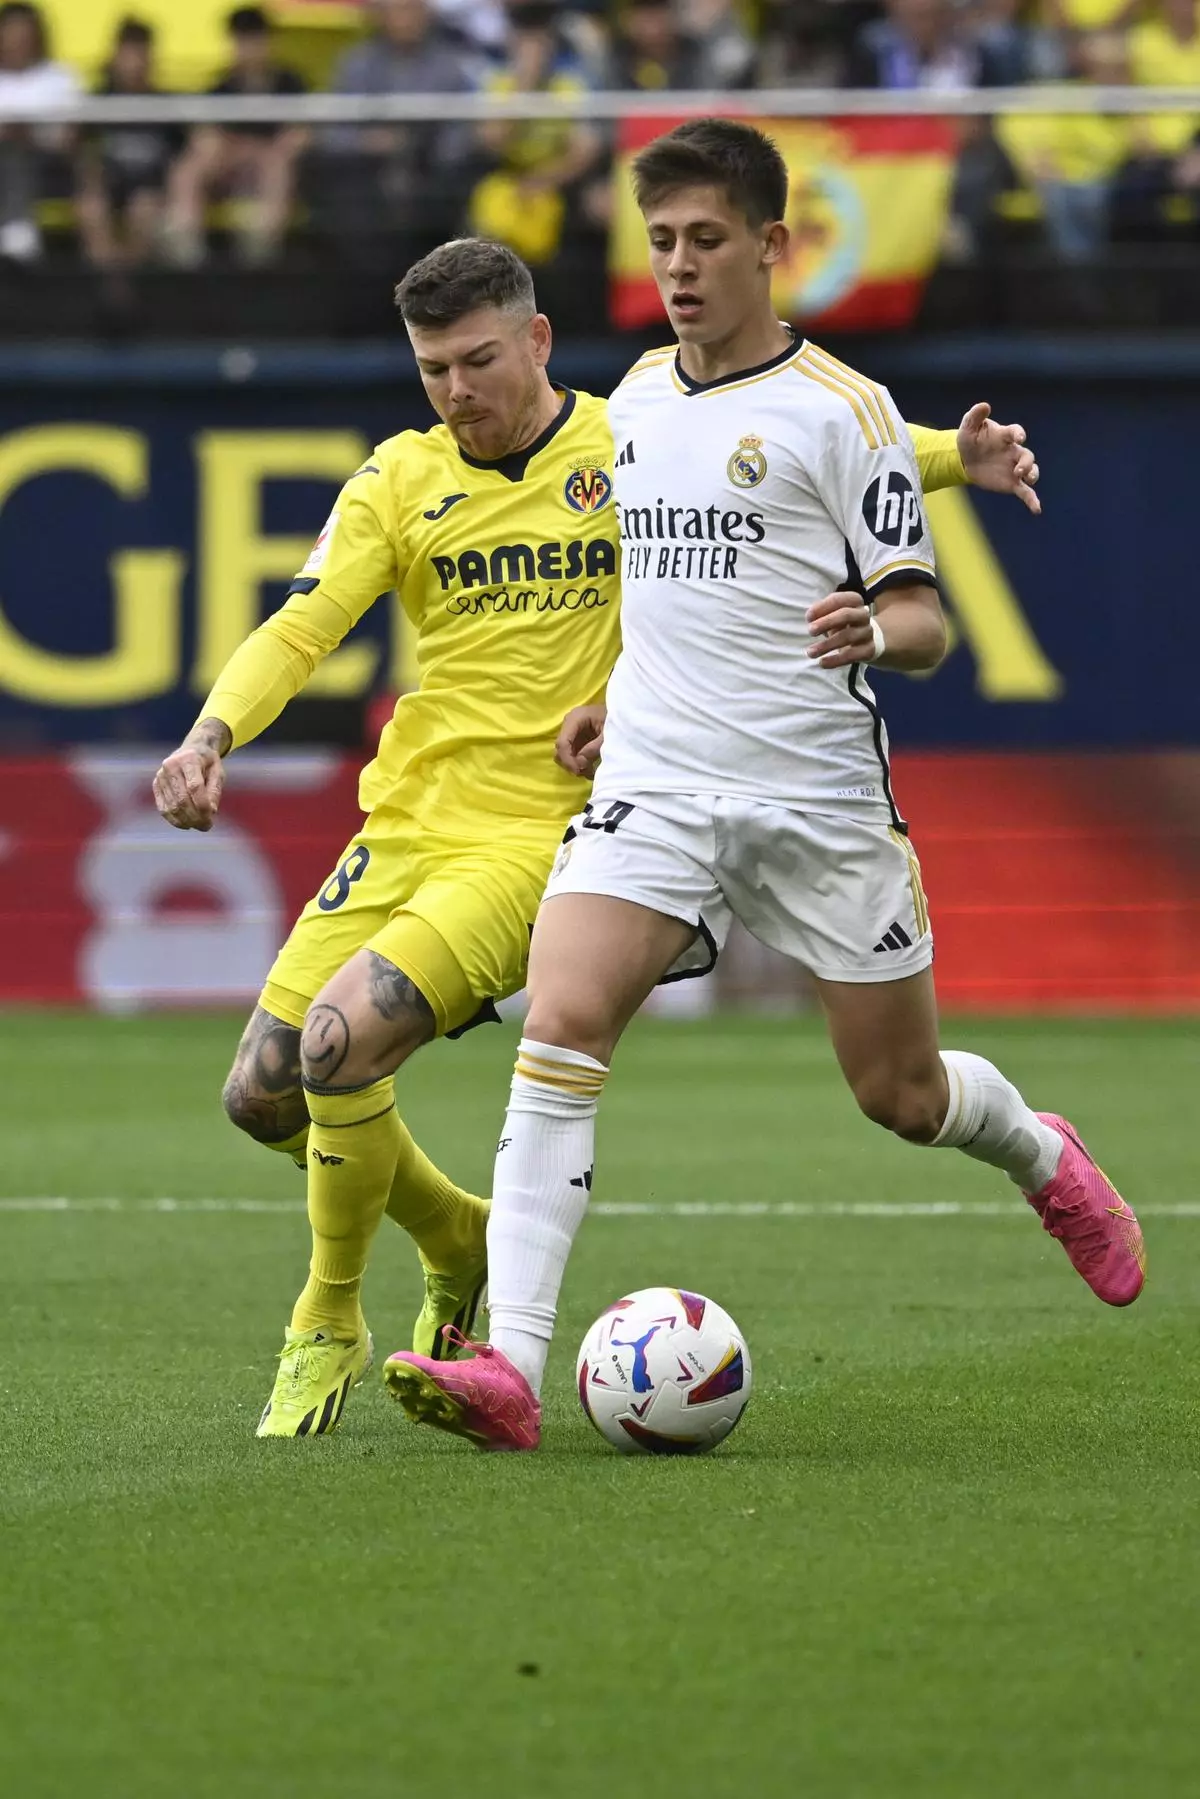 LaLiga EA Sports | Villarreal - Real Madrid, en imágenes